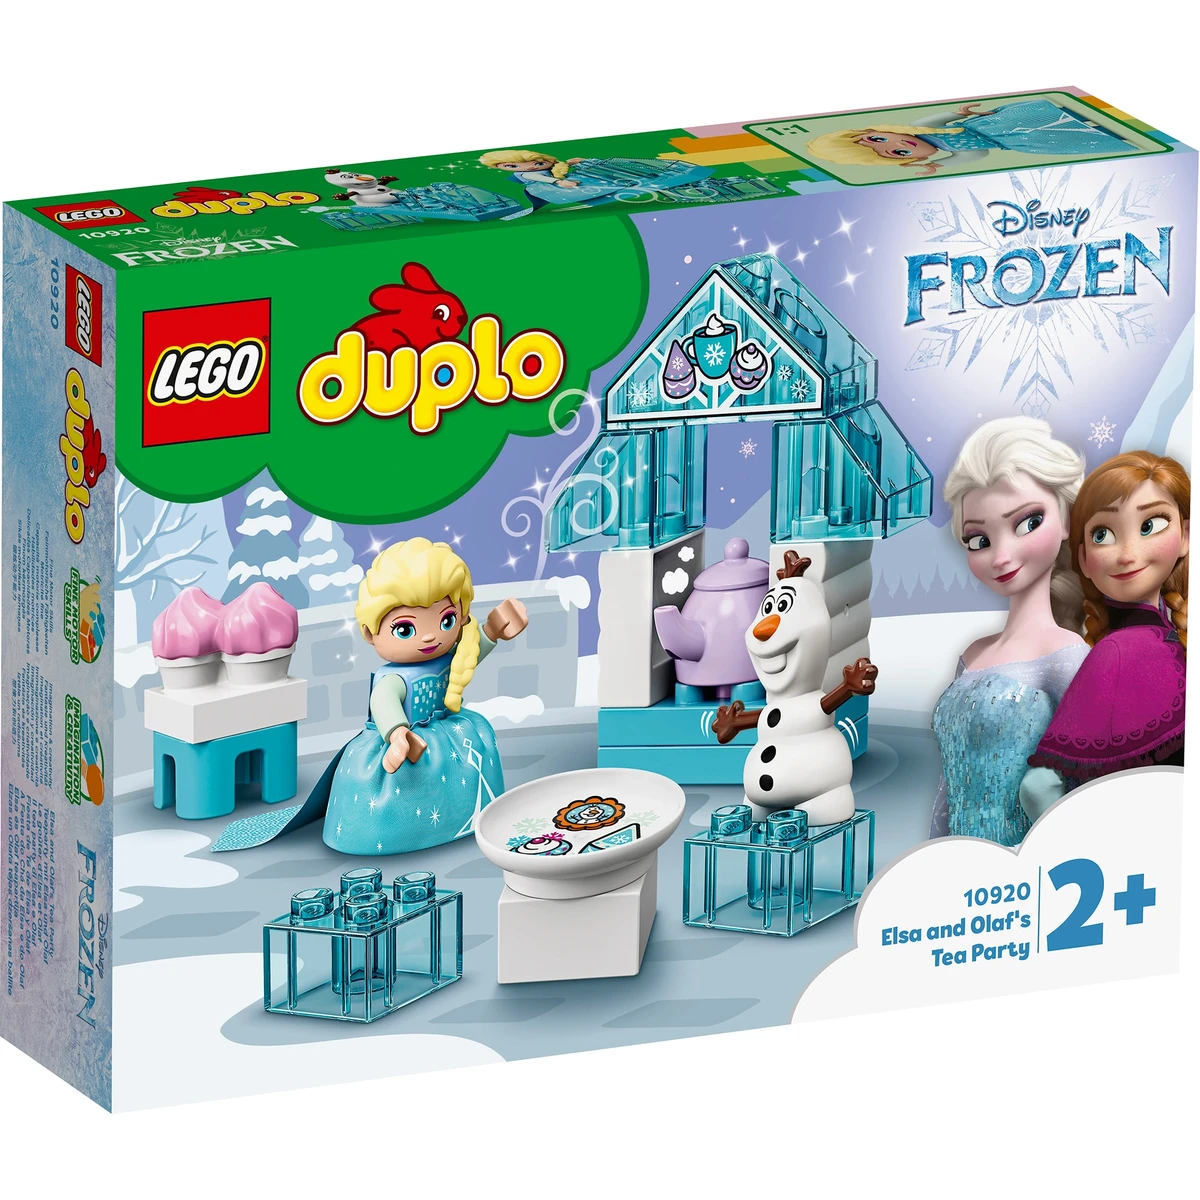 LEGO DUPLO Princess TM Elsa és Olaf teapartija 10920